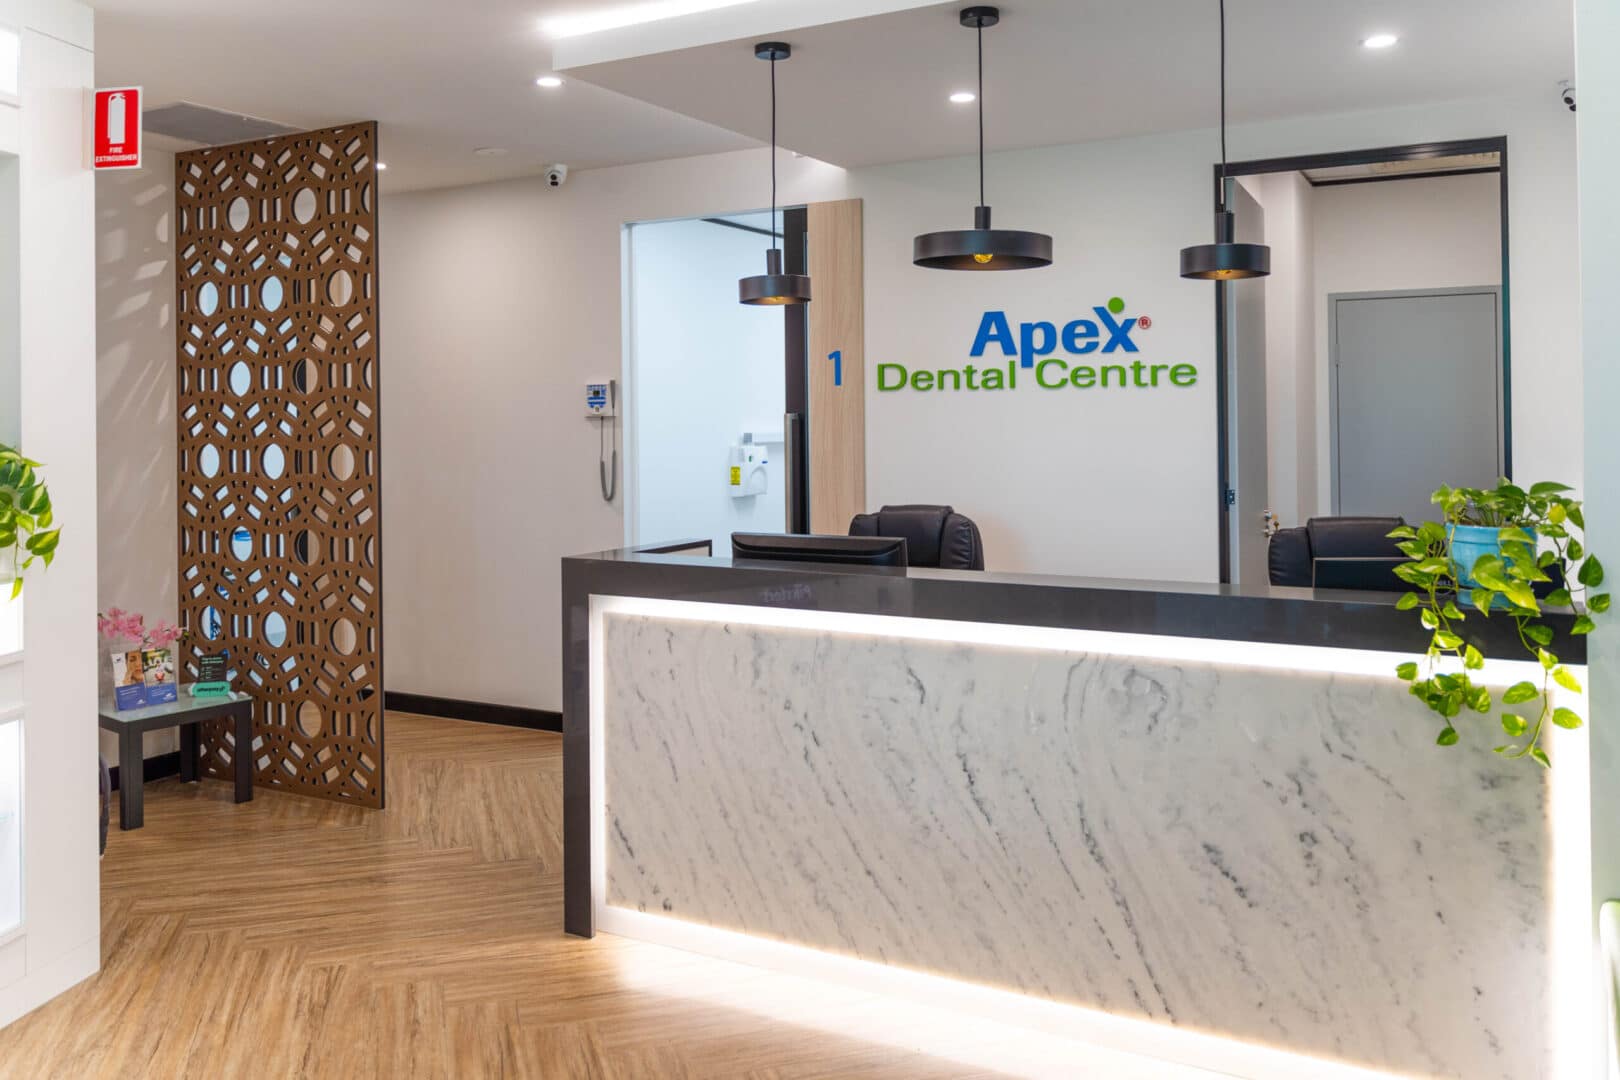 Apex Dental Centre Reception Desk